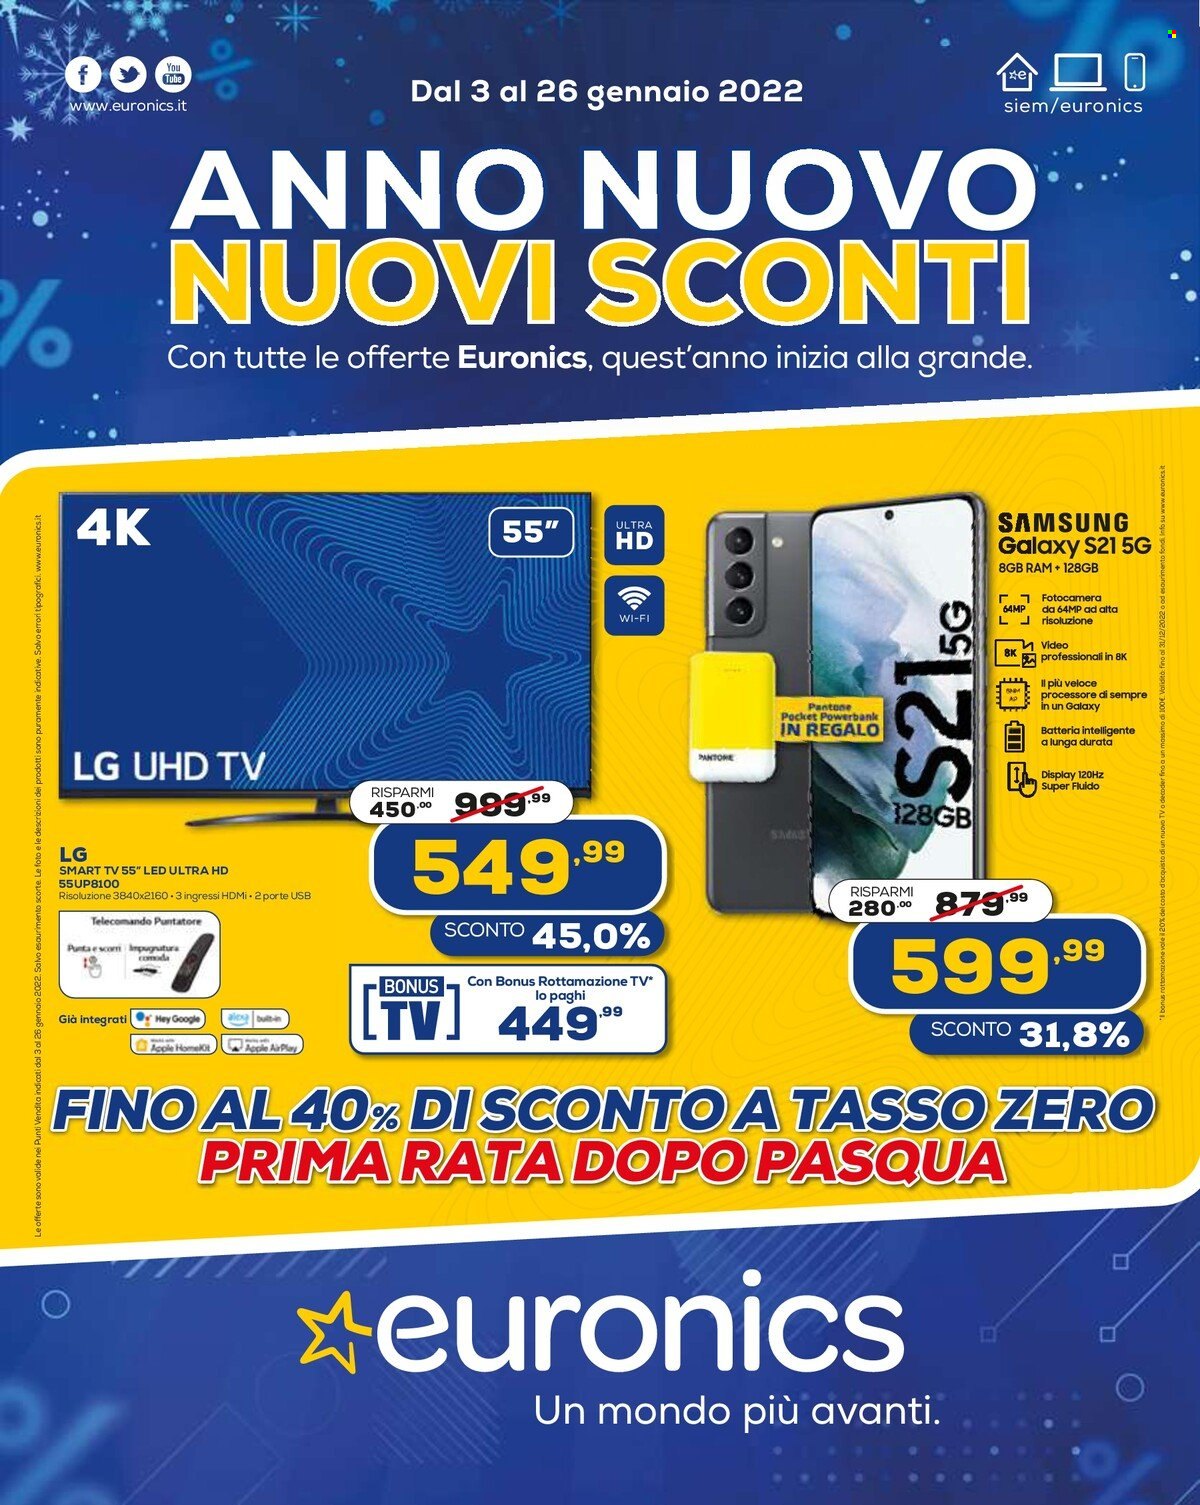 Volantino Euronics - 3/1/2022 - 26/1/2022 - Prodotti in offerta - Samsung Galaxy, LG, Apple, Samsung, power bank, fotocamera, Smart TV, Ultra HD, televisore. Pagina 1.